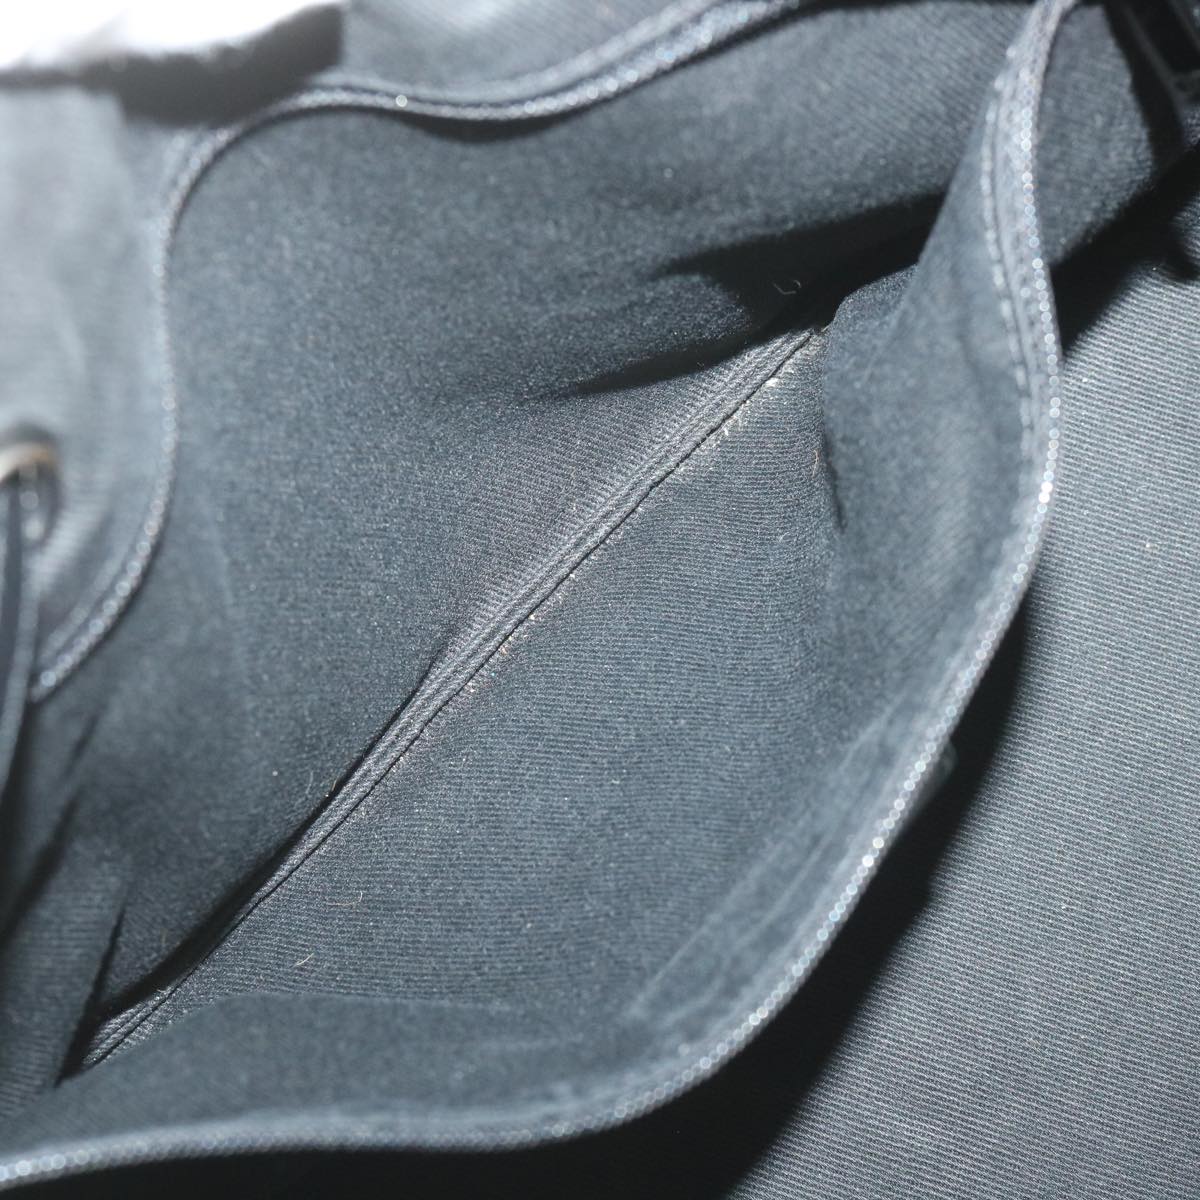 CHANEL Chain Shoulder Bag Harako leather Black CC Auth bs10036